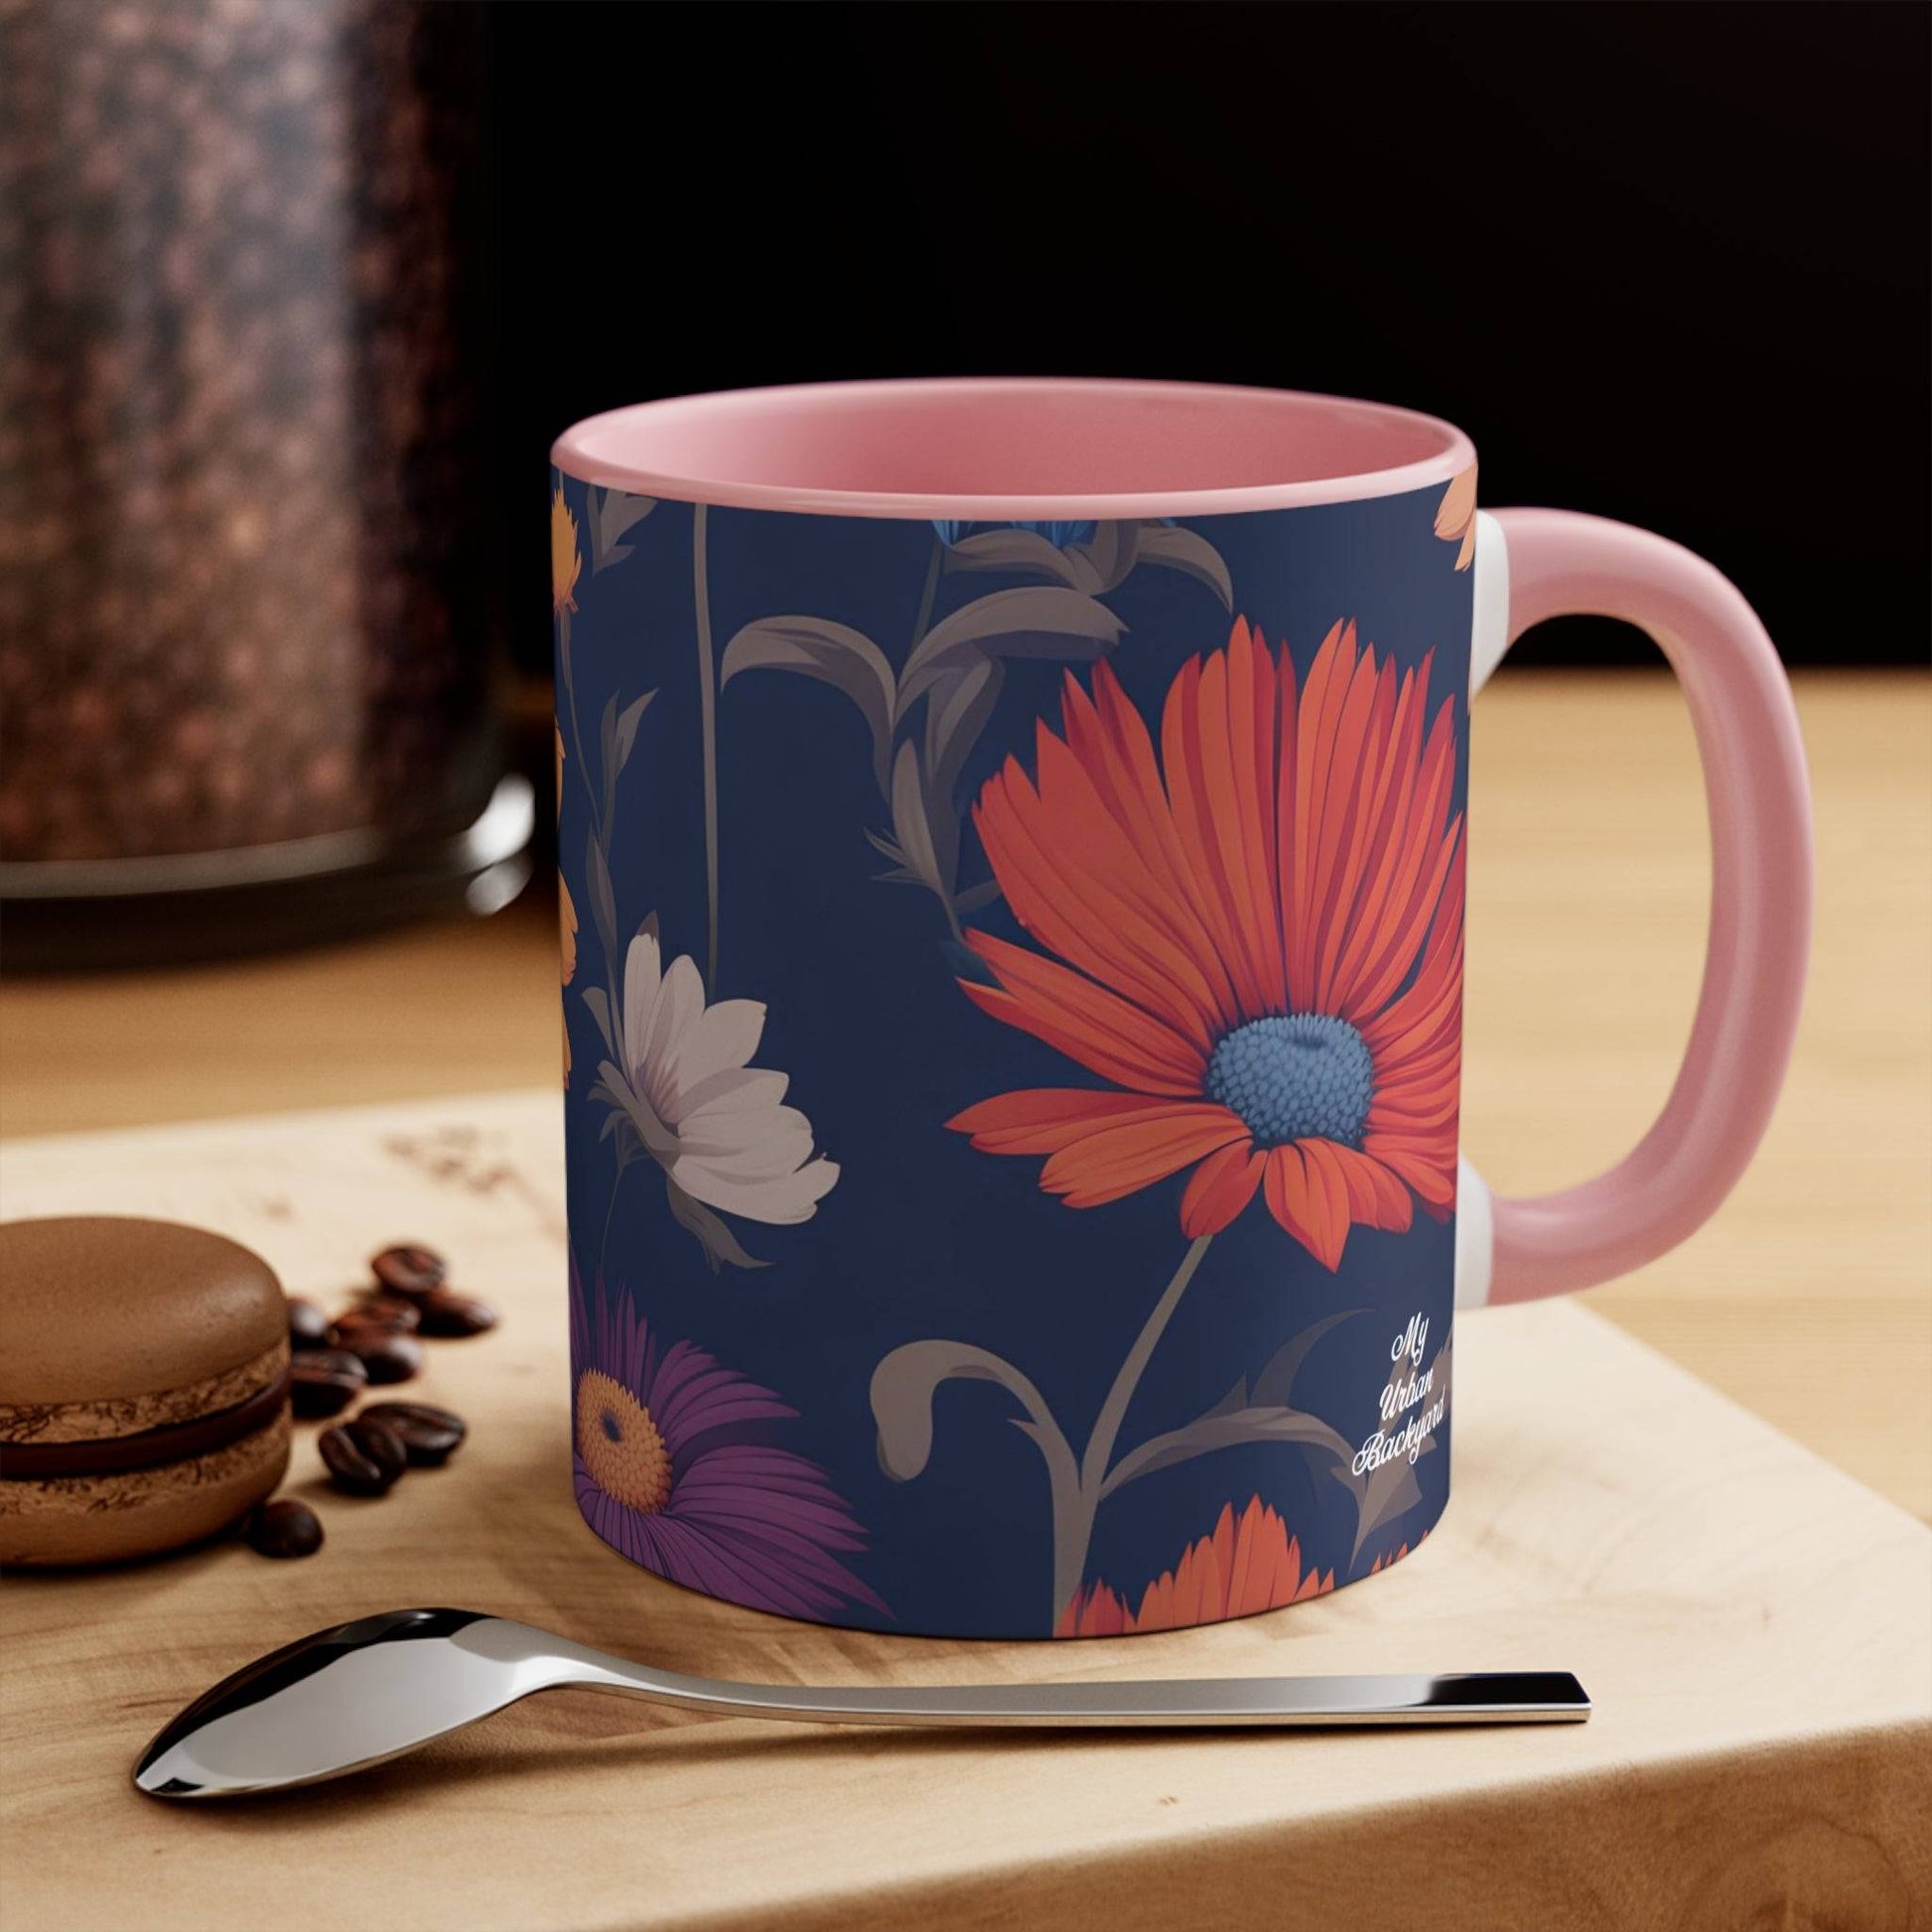 Ceramic Mug for Coffee, Tea, Hot Cocoa. Home/Office, Fun Wildflowers